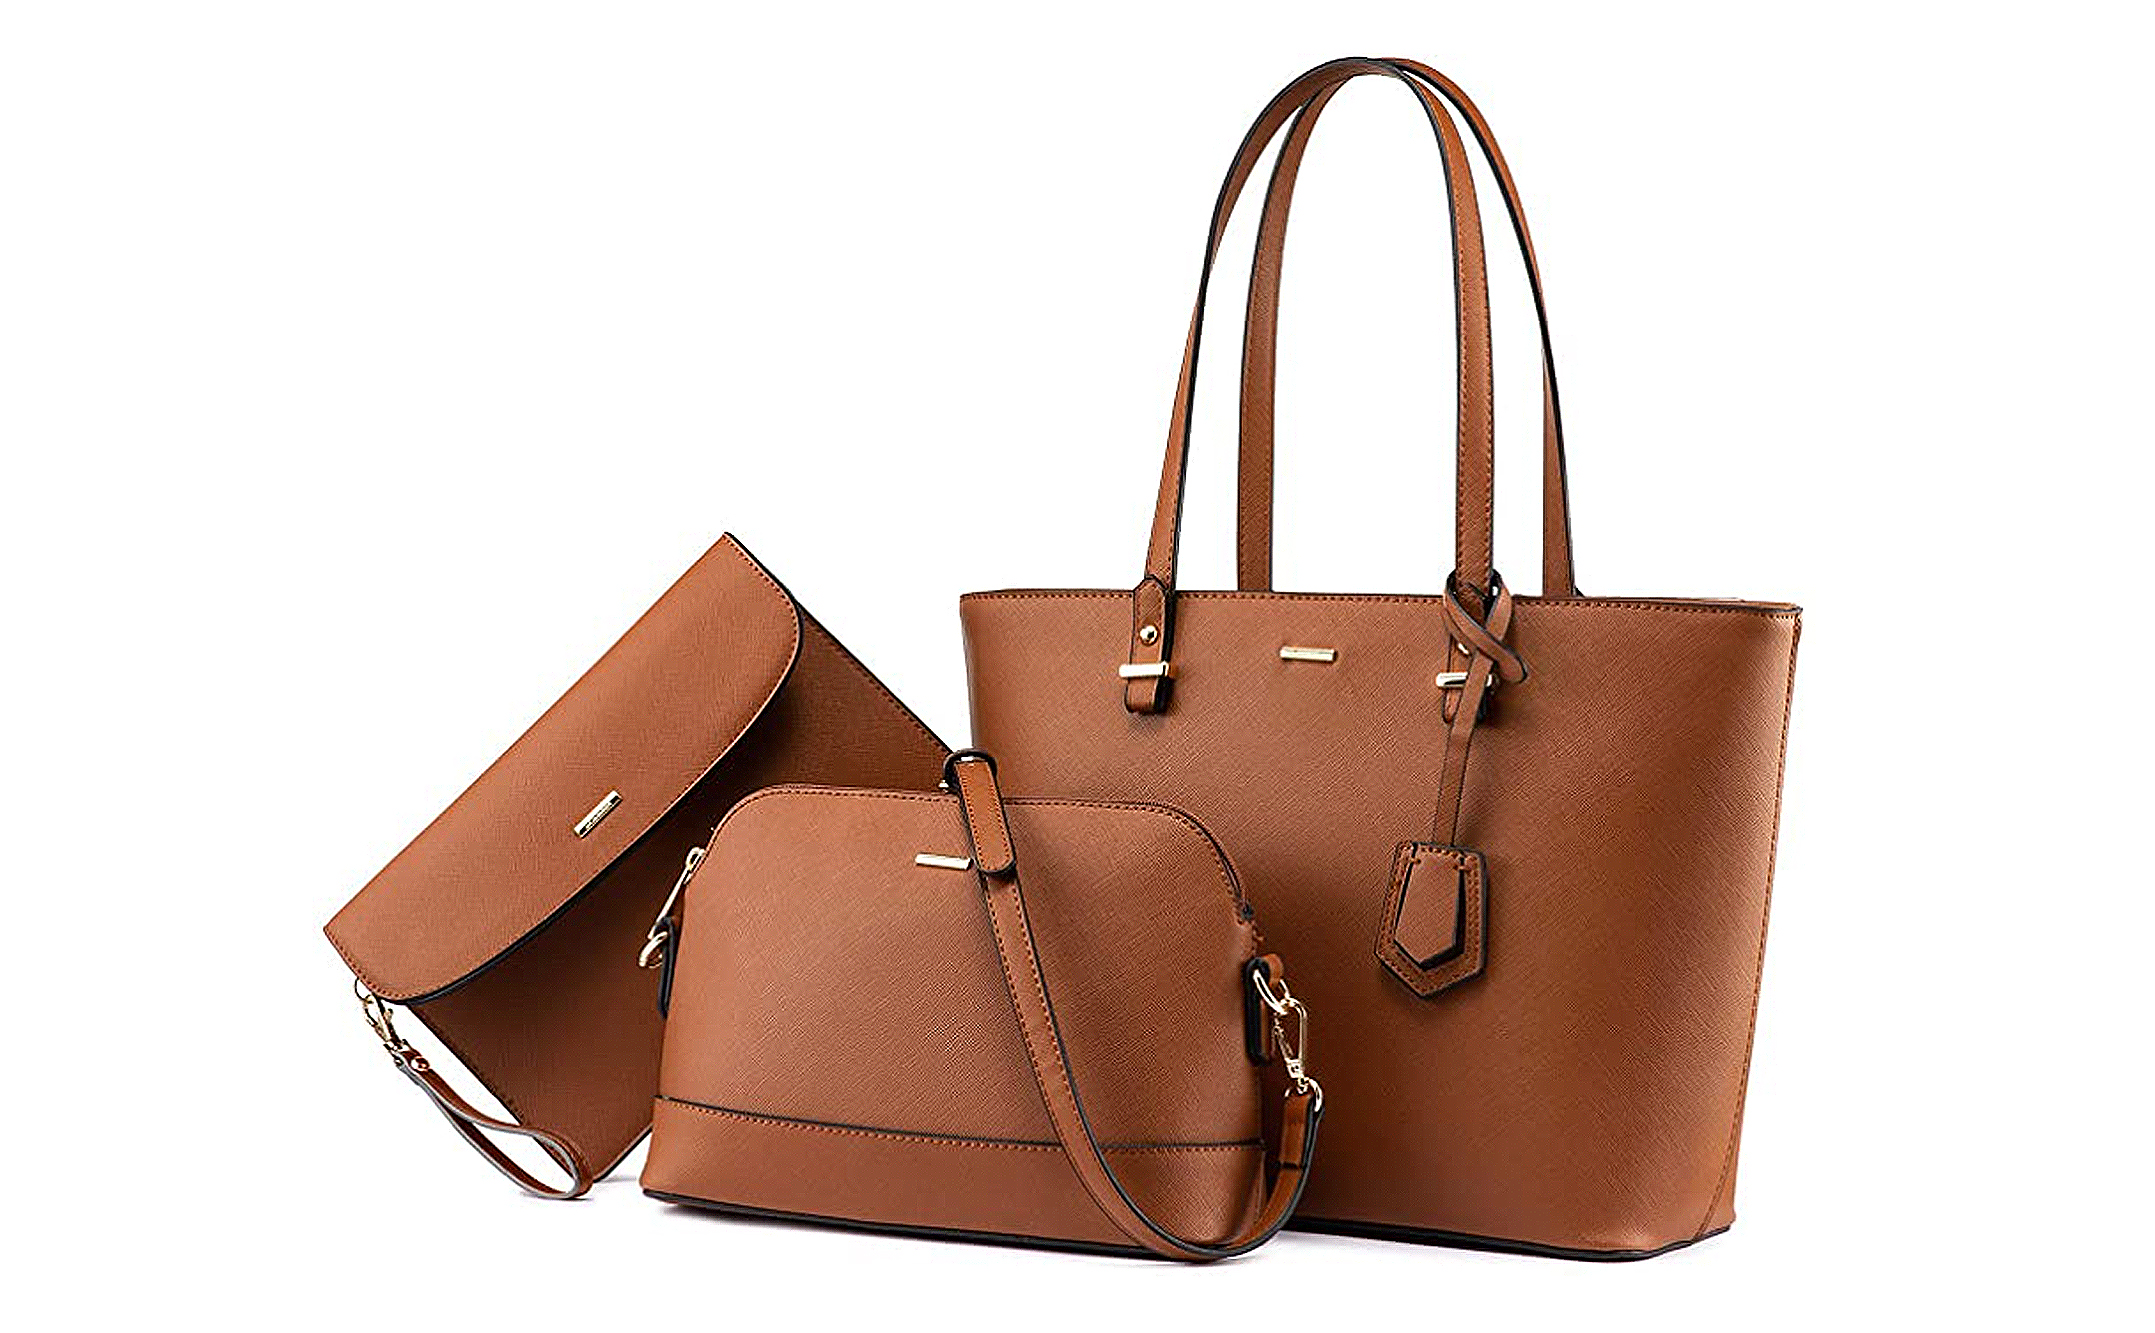 LOVEVOOK Handbags for Women Shoulder Bag Fashion Tote Top Handle Satchel Purse Set 3PCs 